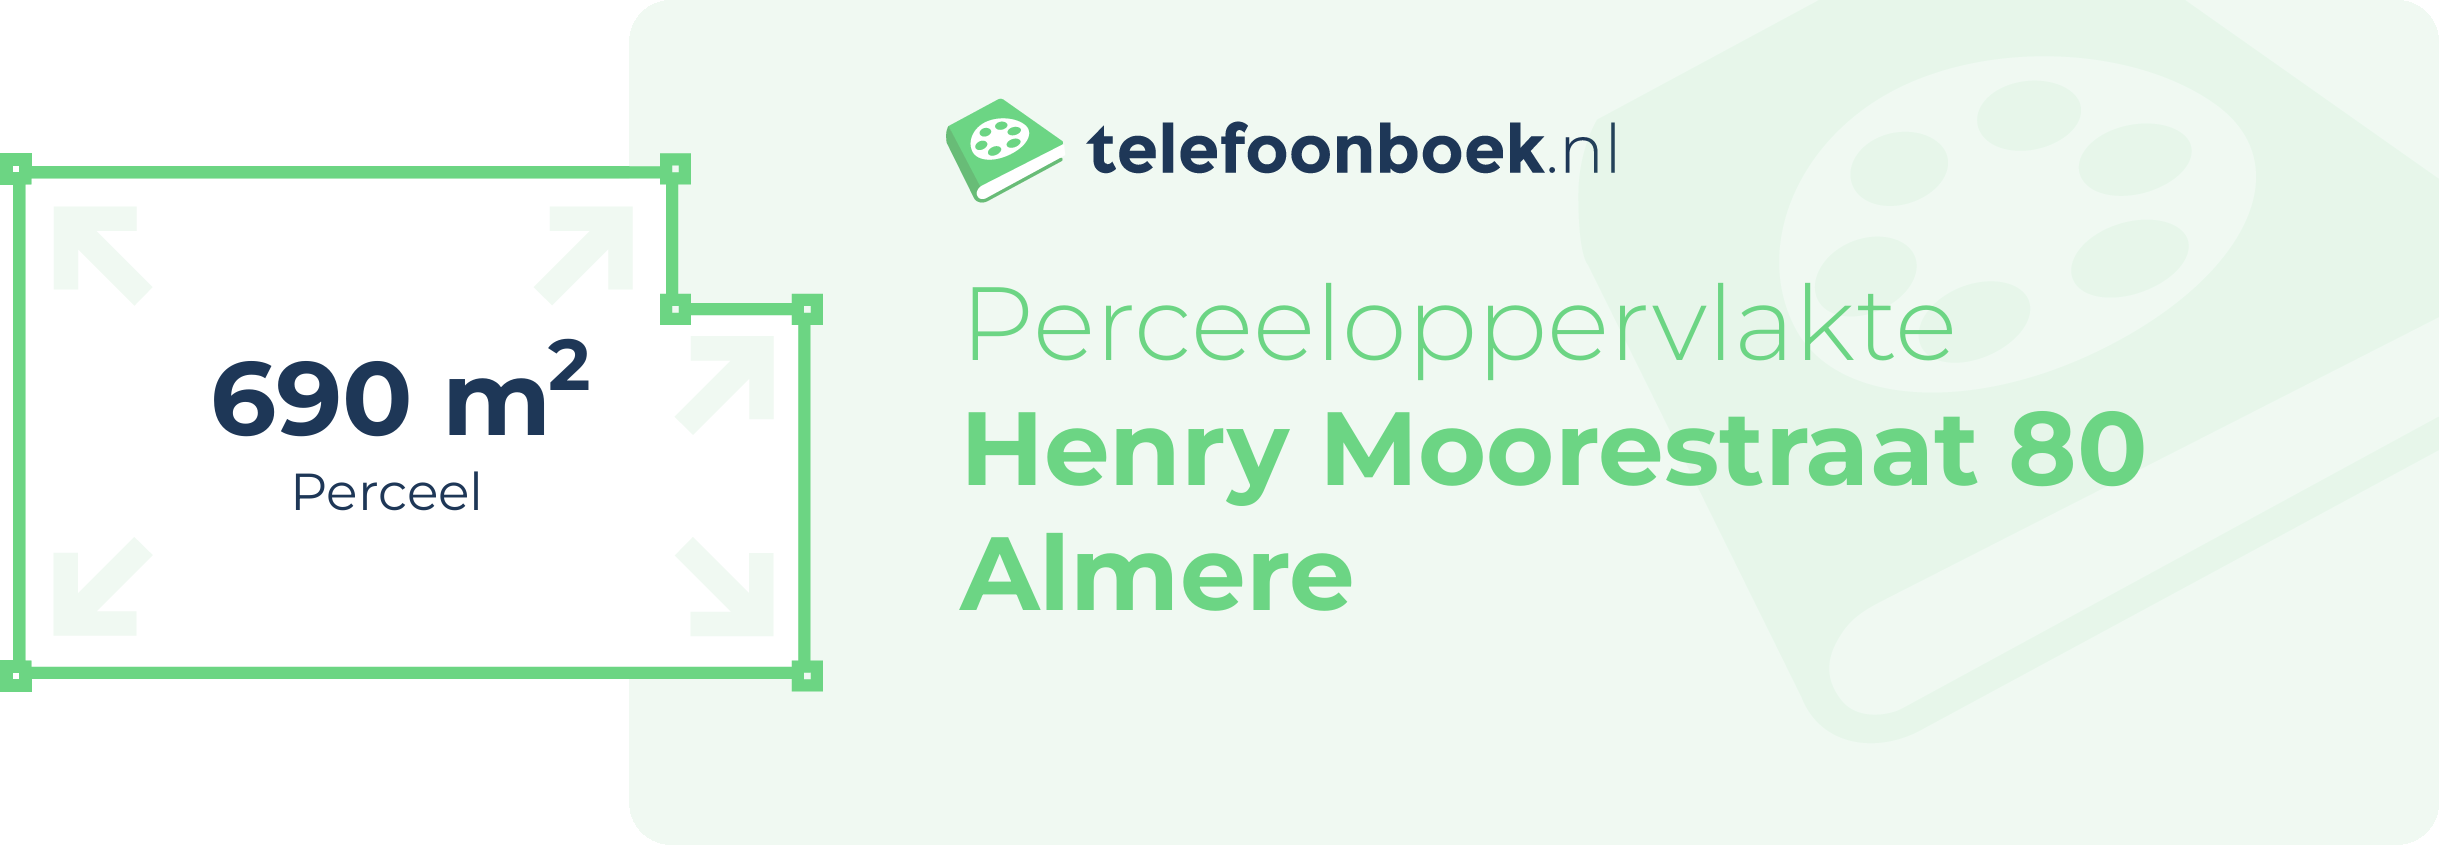 Perceeloppervlakte Henry Moorestraat 80 Almere